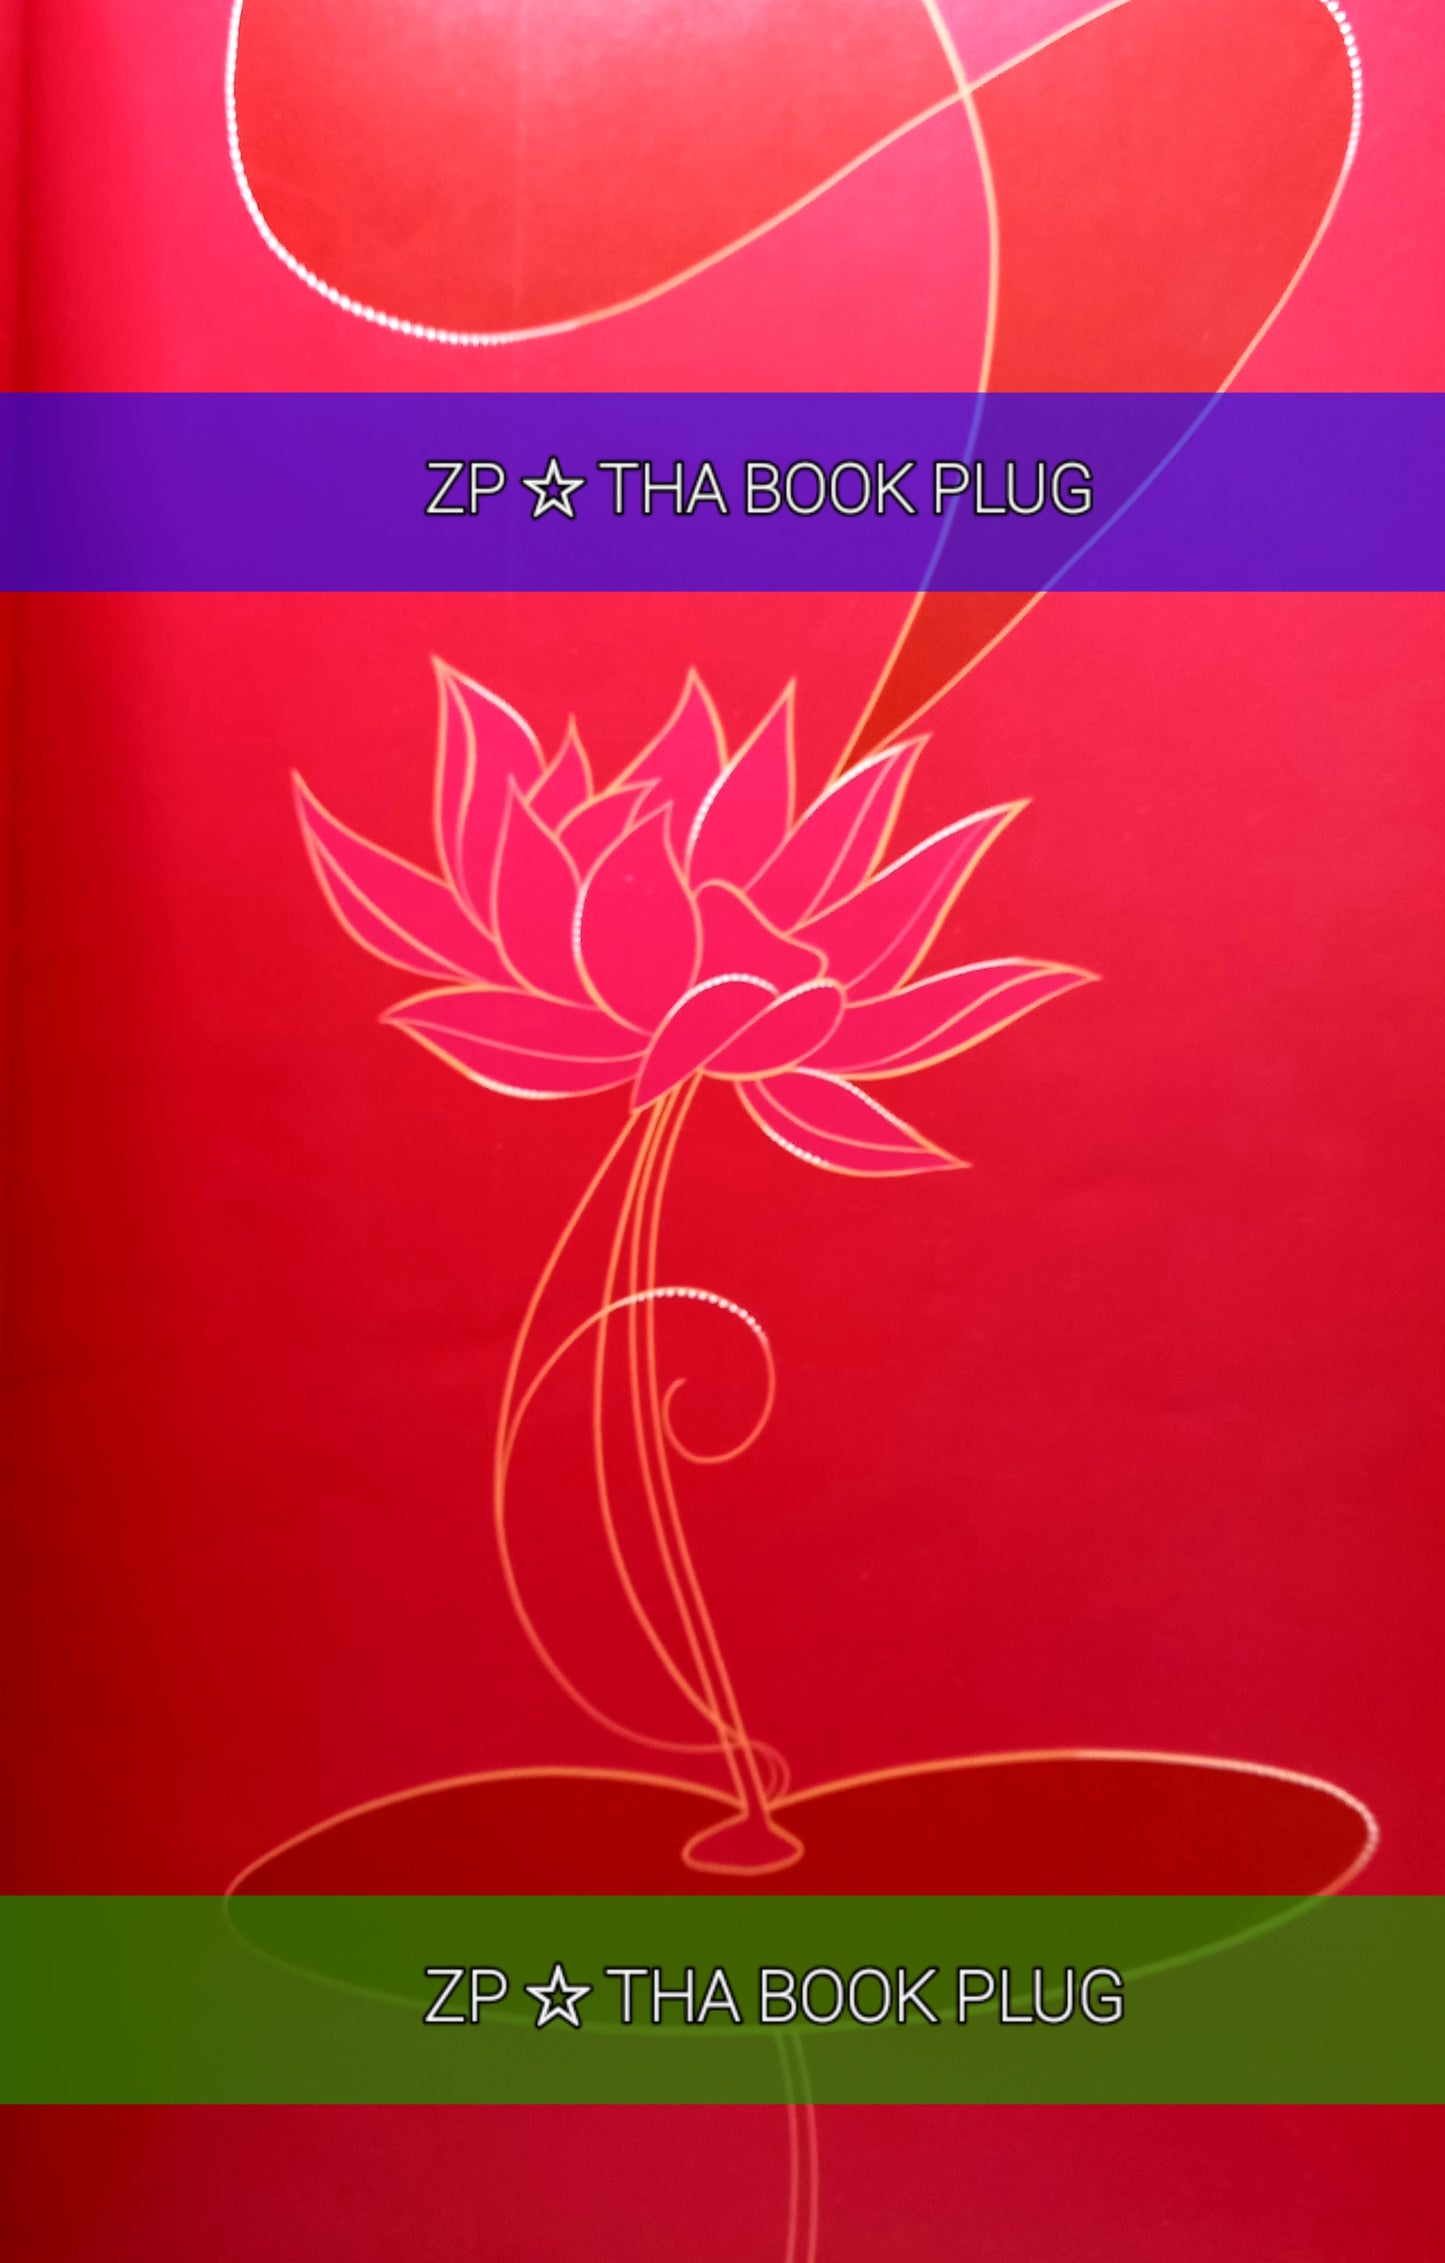 Buddha (A Graphic Novel)